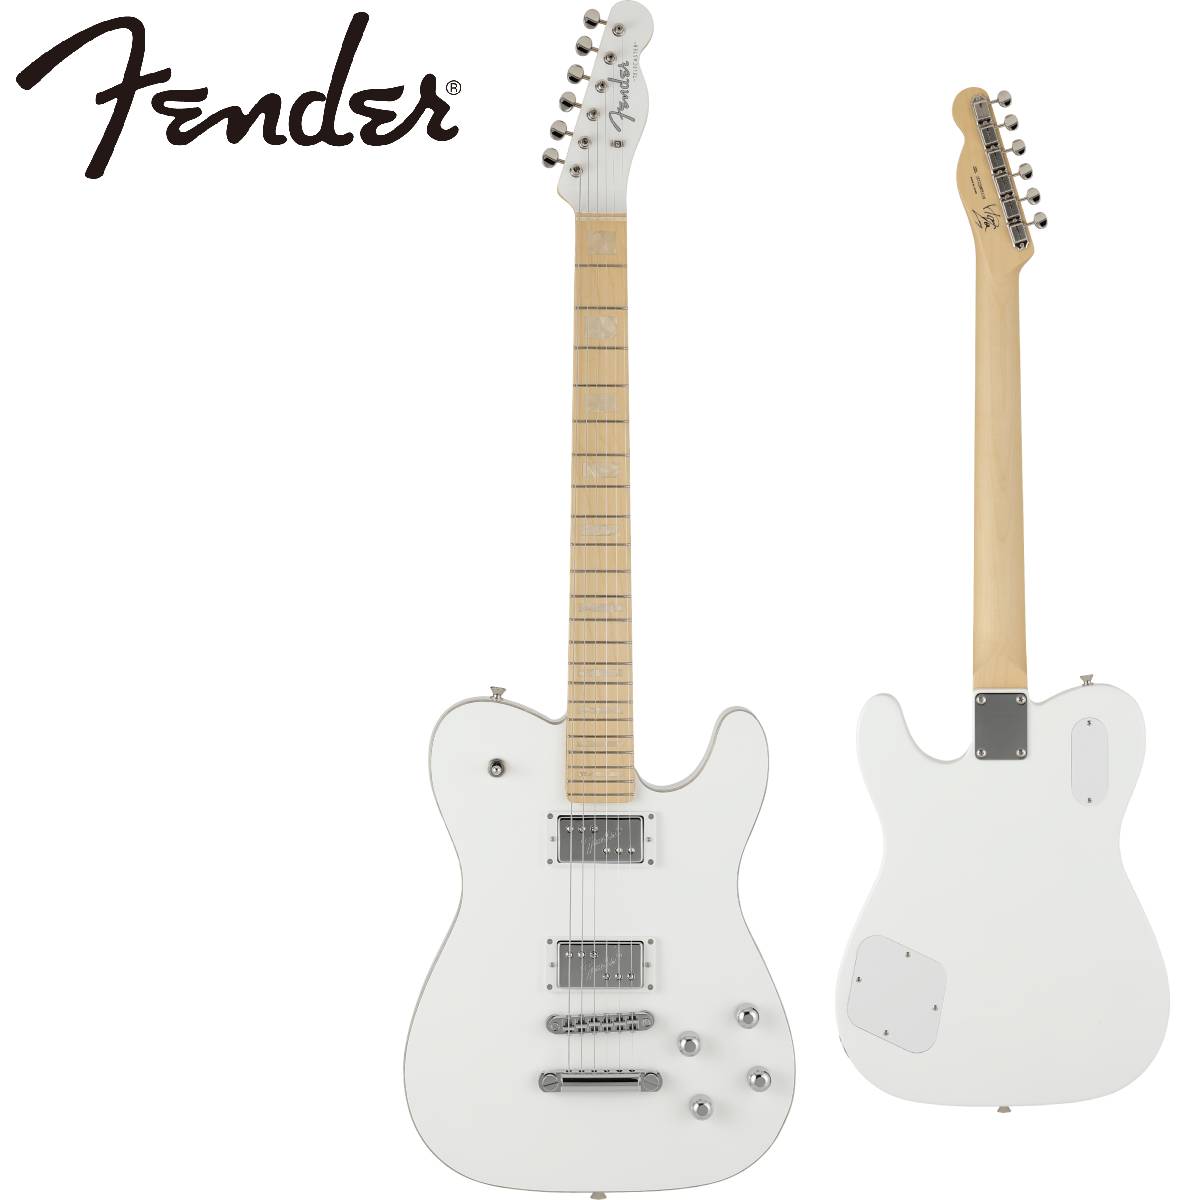 Fender HARUNA TELECASTER BOOST -Arctic White- 新品[フェンダー][ハルナ][テレキャスター][SCANDAL,スキャンダル][White,ホワイト,白][Telecaster,TL][Electric Guitar,エレキギター]